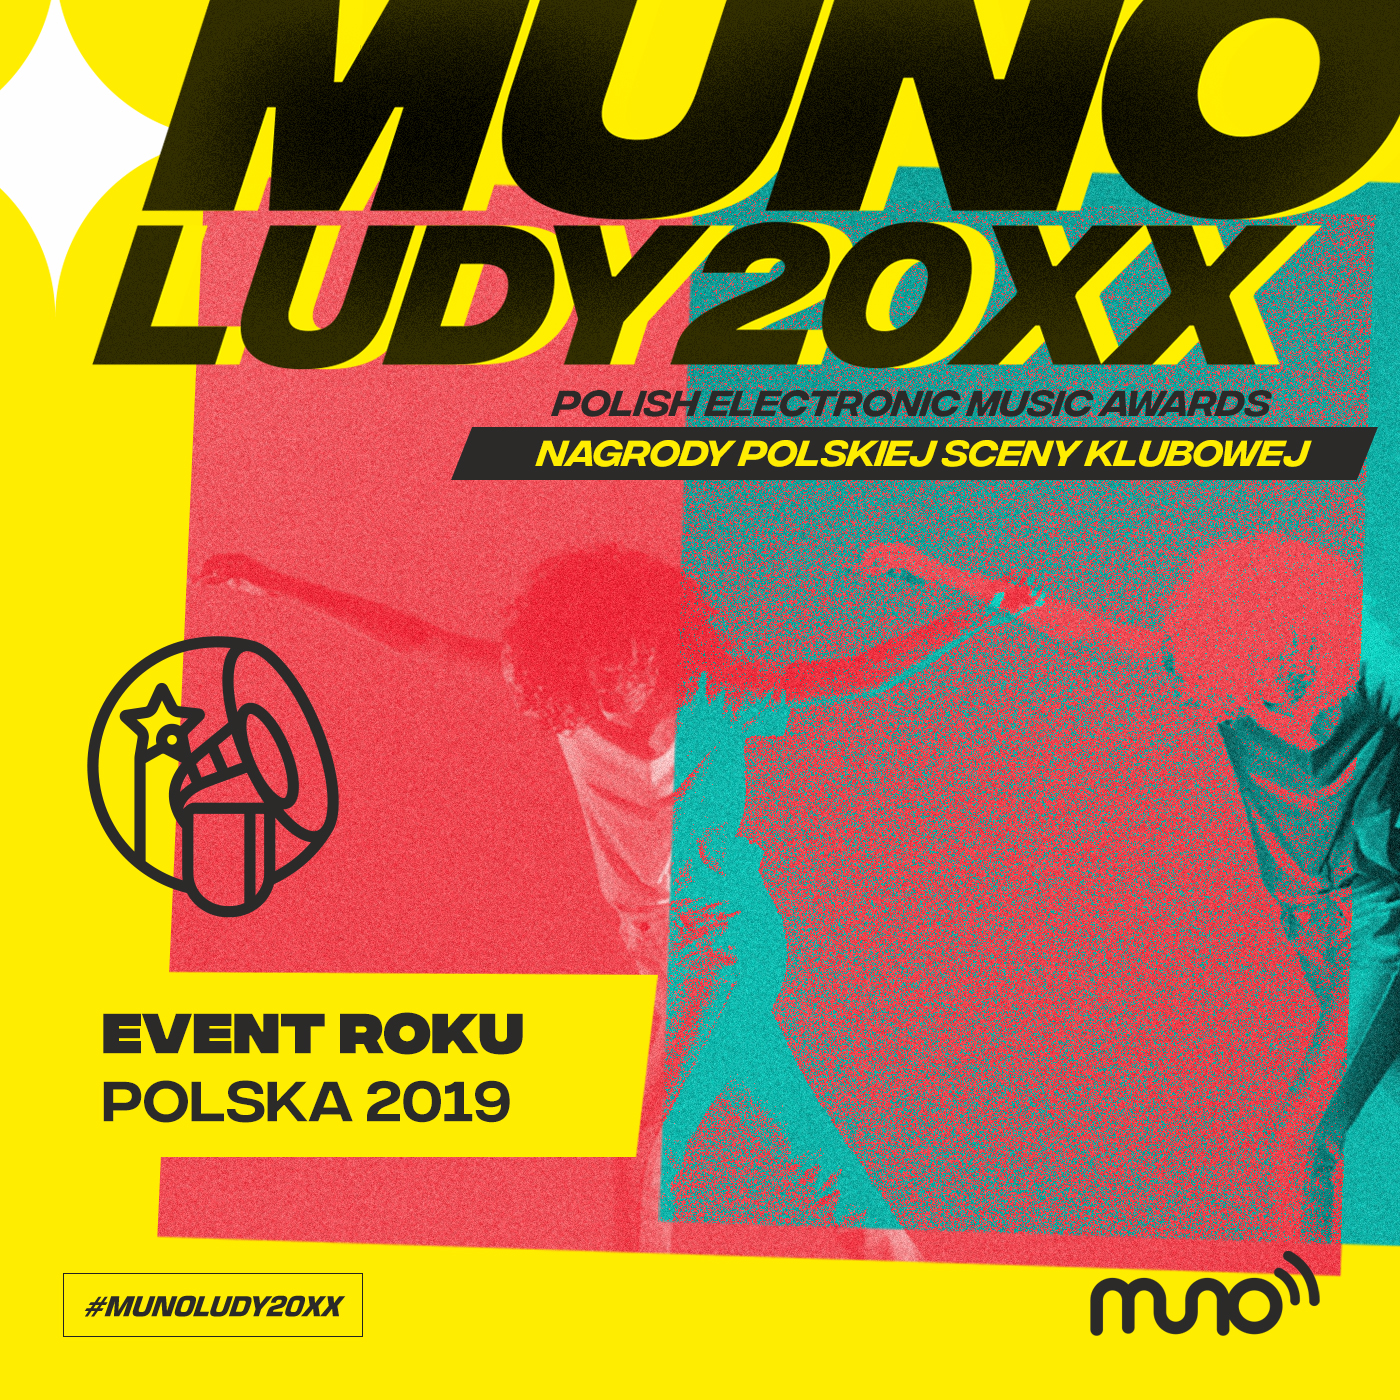 Munoludy 20XX Event Roku Polska 2019